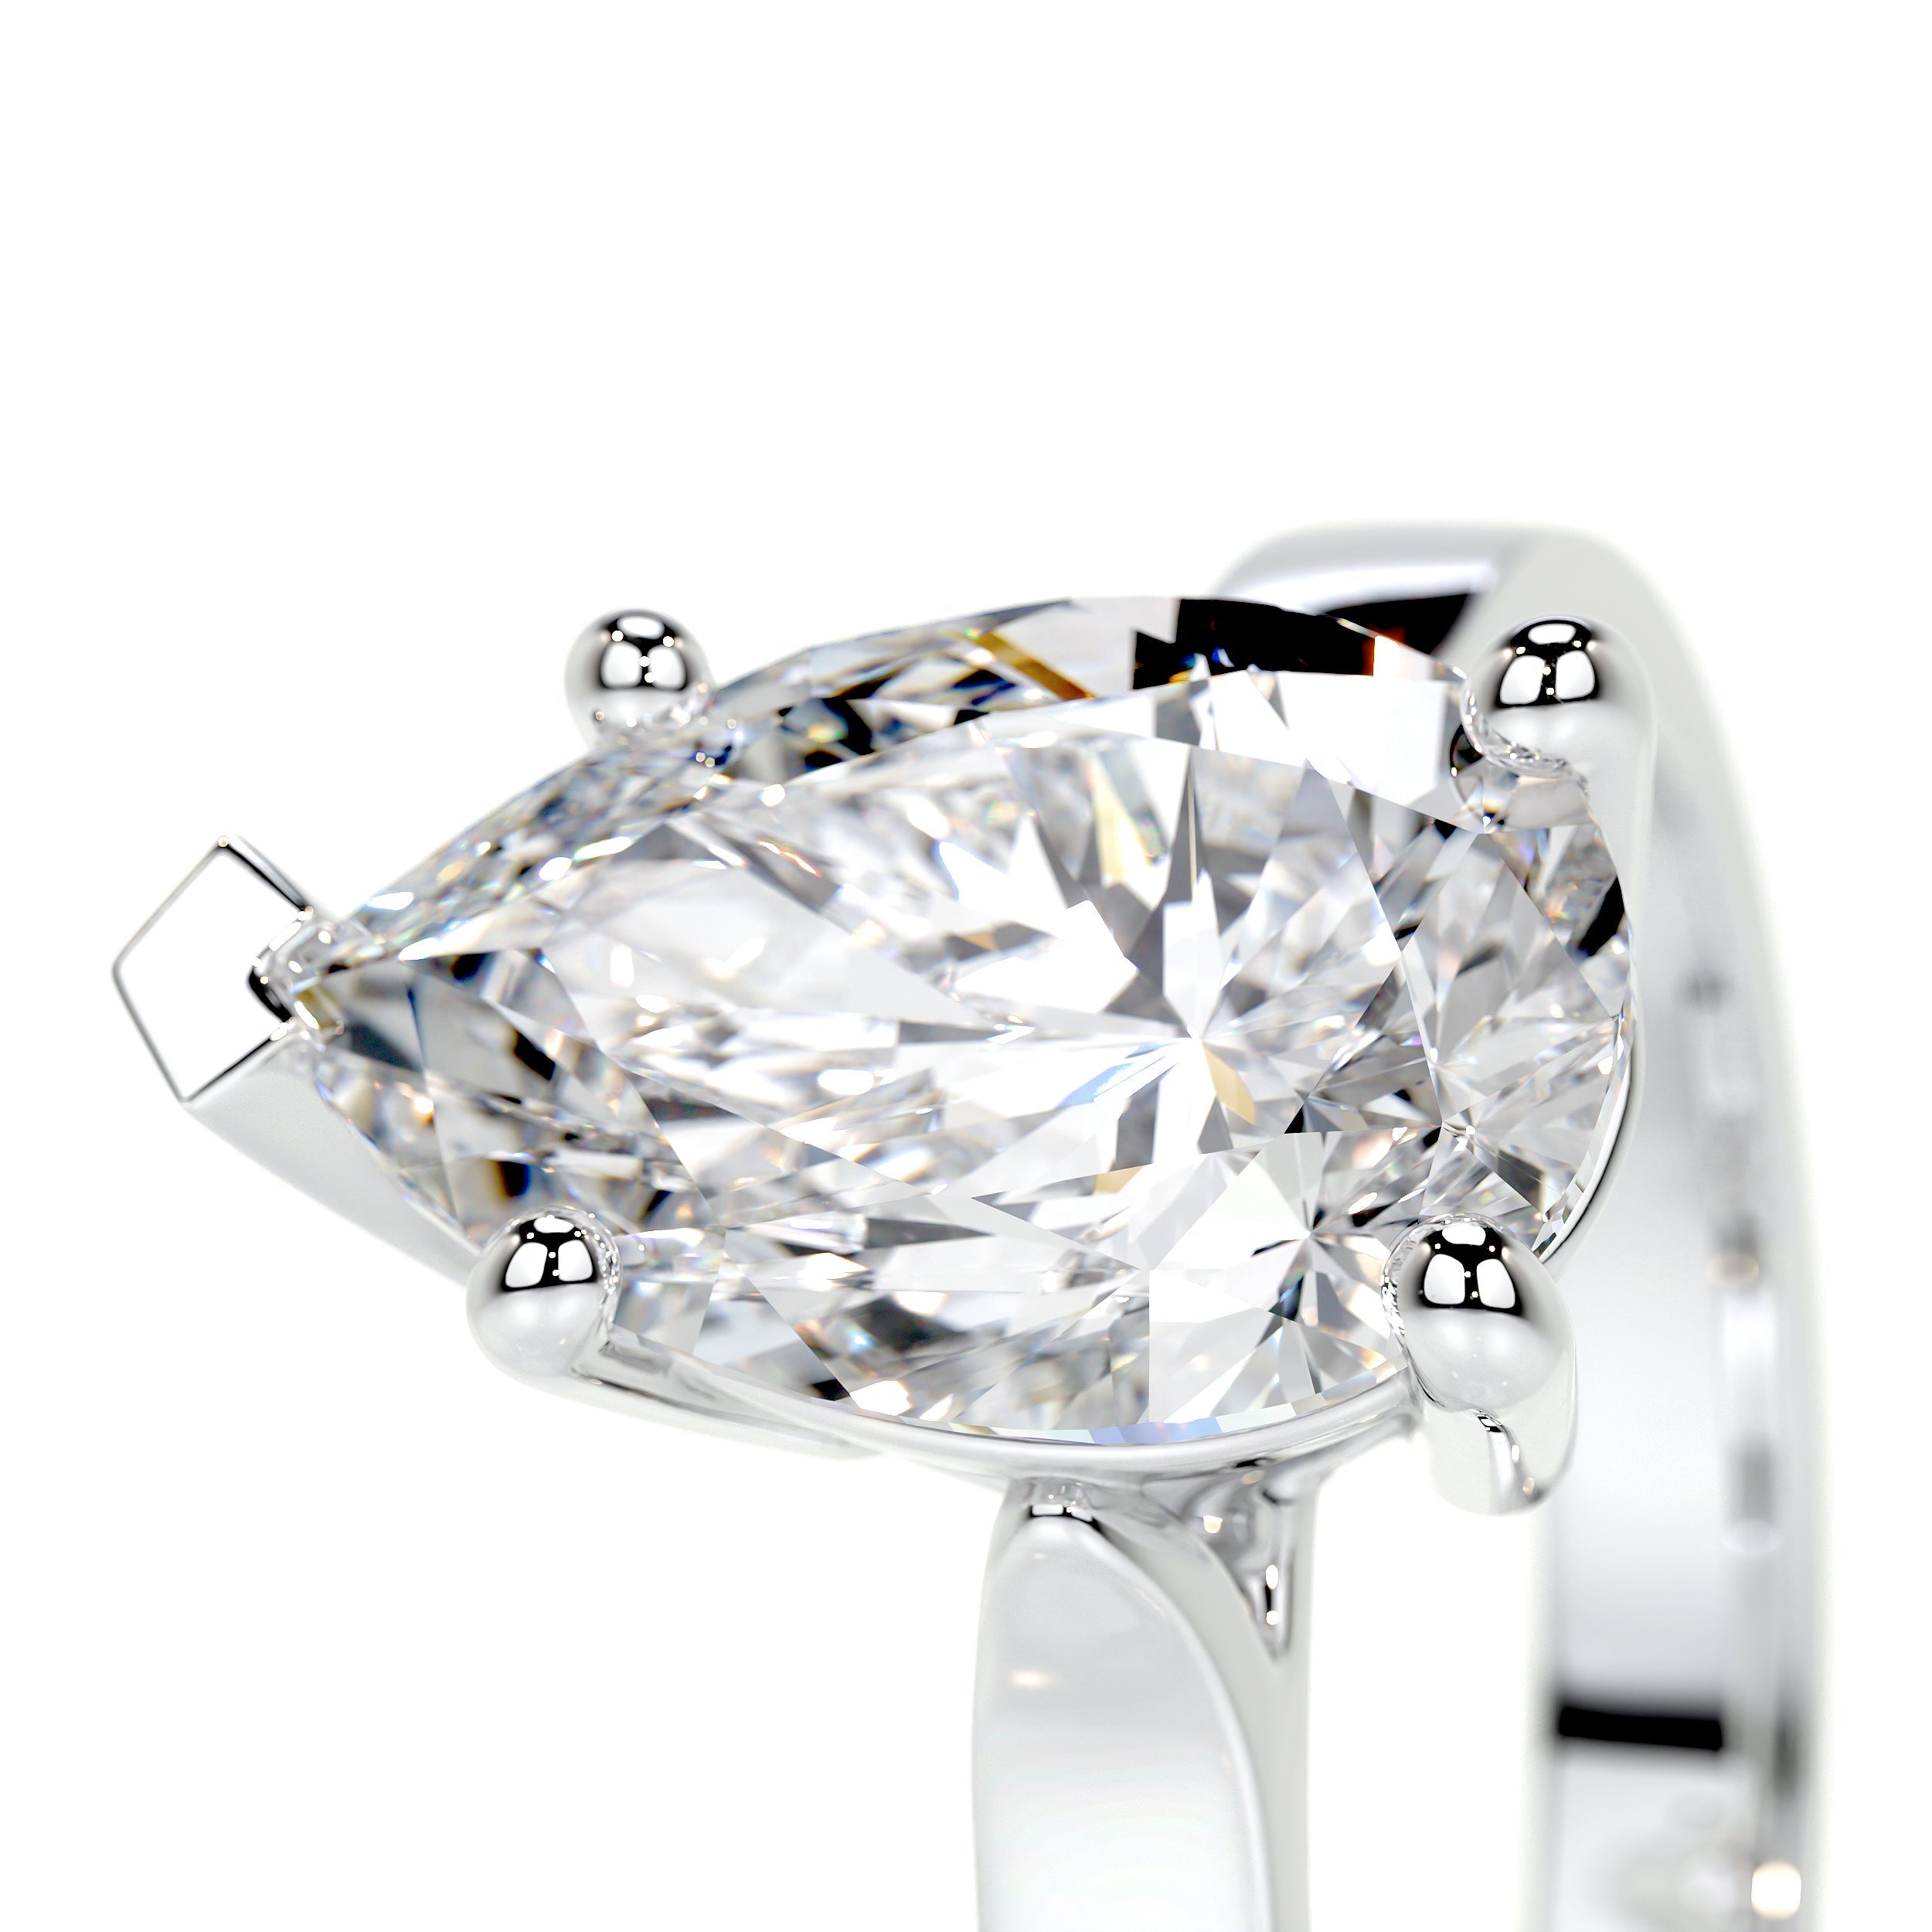 Jessica Lab Grown Diamond Ring   (2 Carat) -14K White Gold